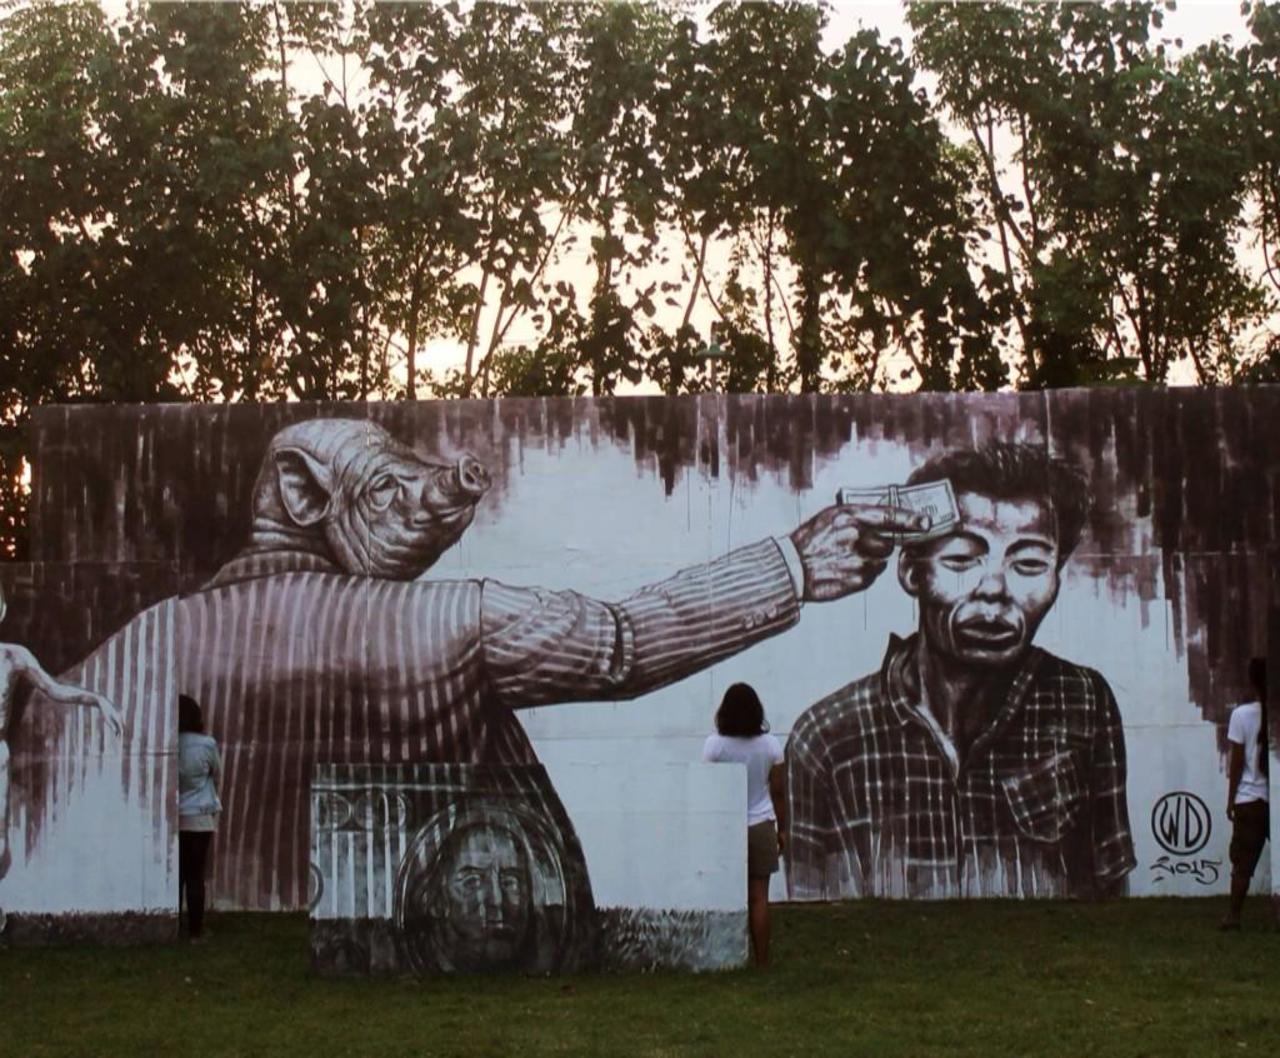 'Money Kills'
Street Art by the artist WD

#art #arte #graffiti #streetart http://t.co/k68H6vBNzq